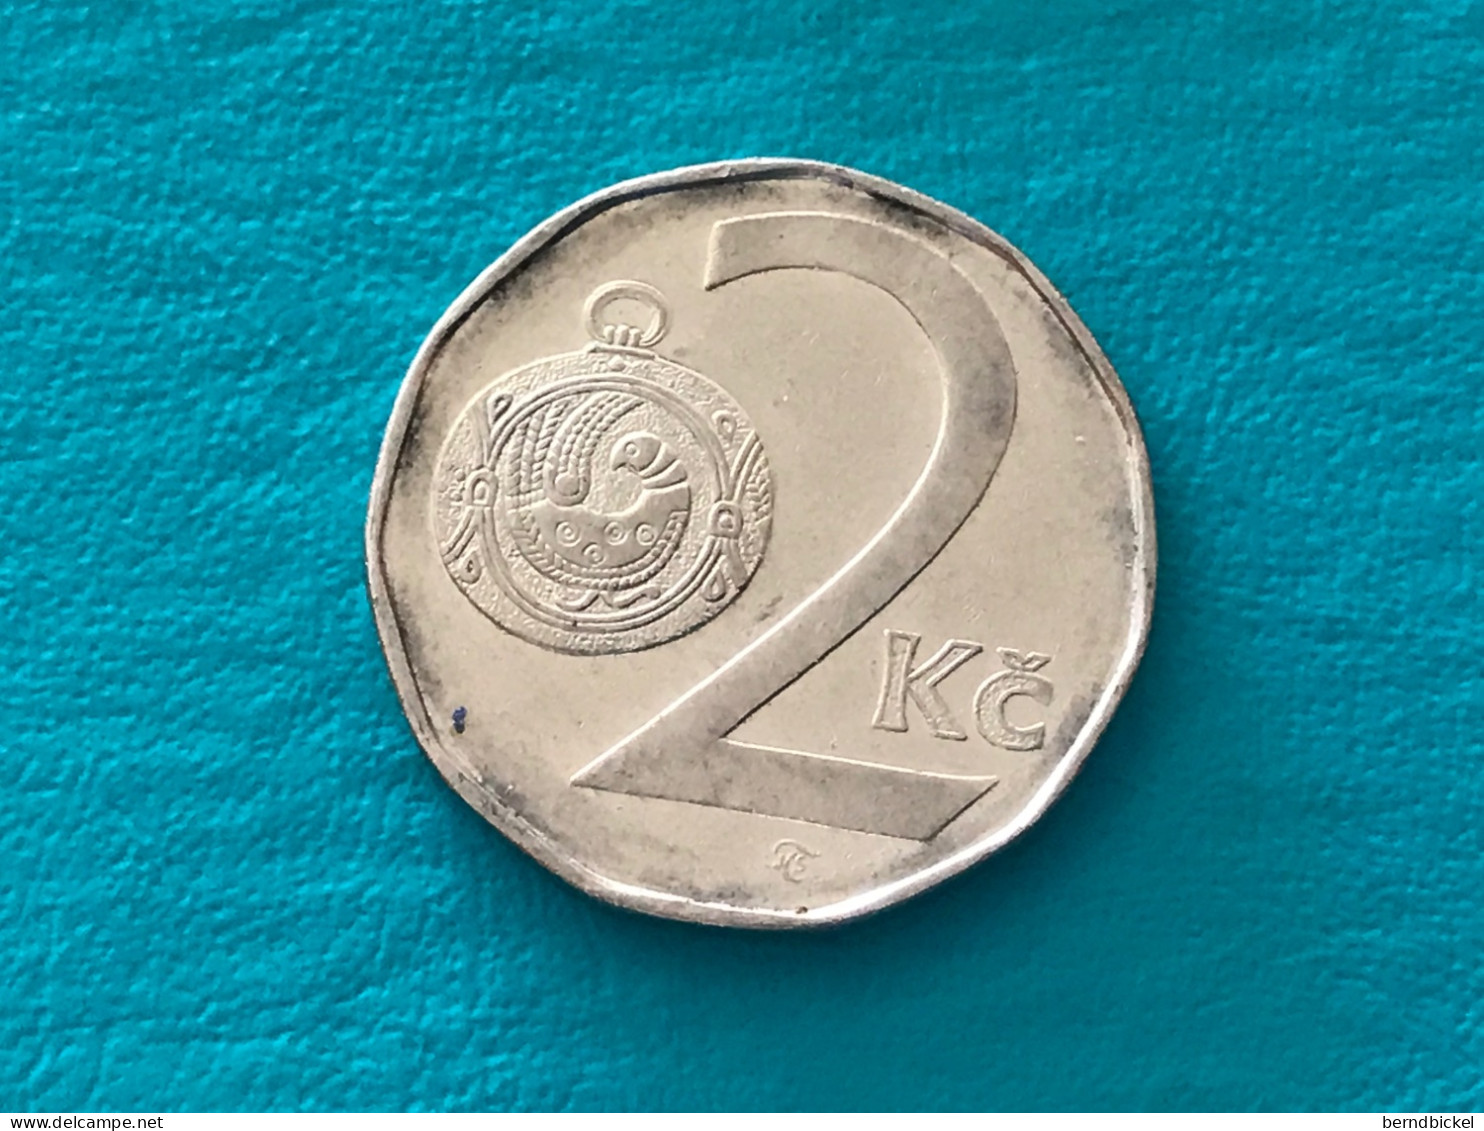 Münze Münzen Umlaufmünze Tschechien 2 Koruna 1993 - Czech Republic